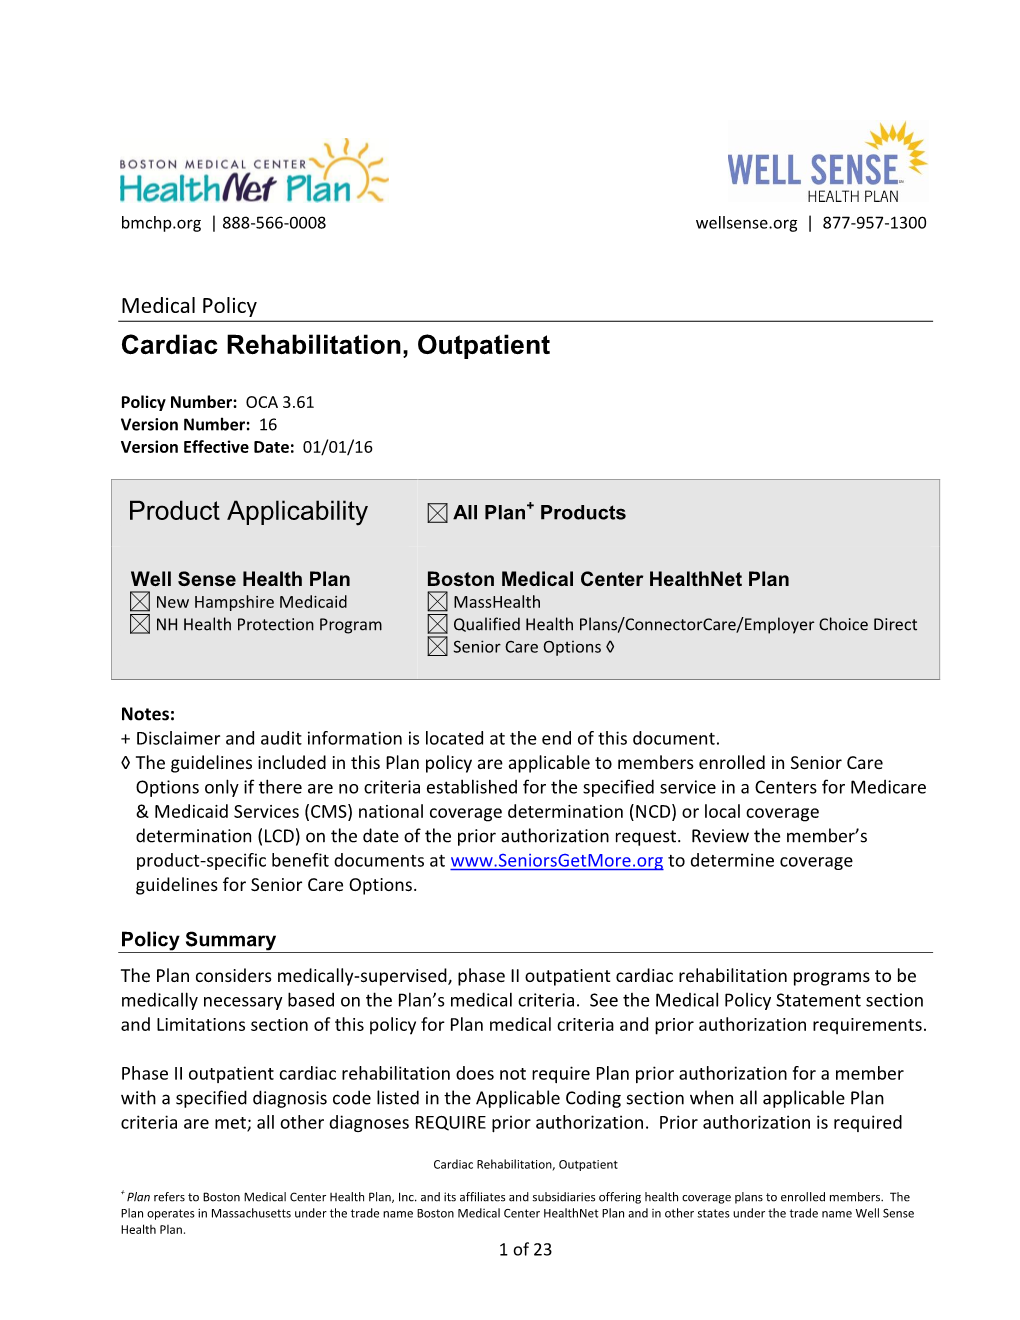 Cardiac Rehabilitation, Outpatient Product Applicability